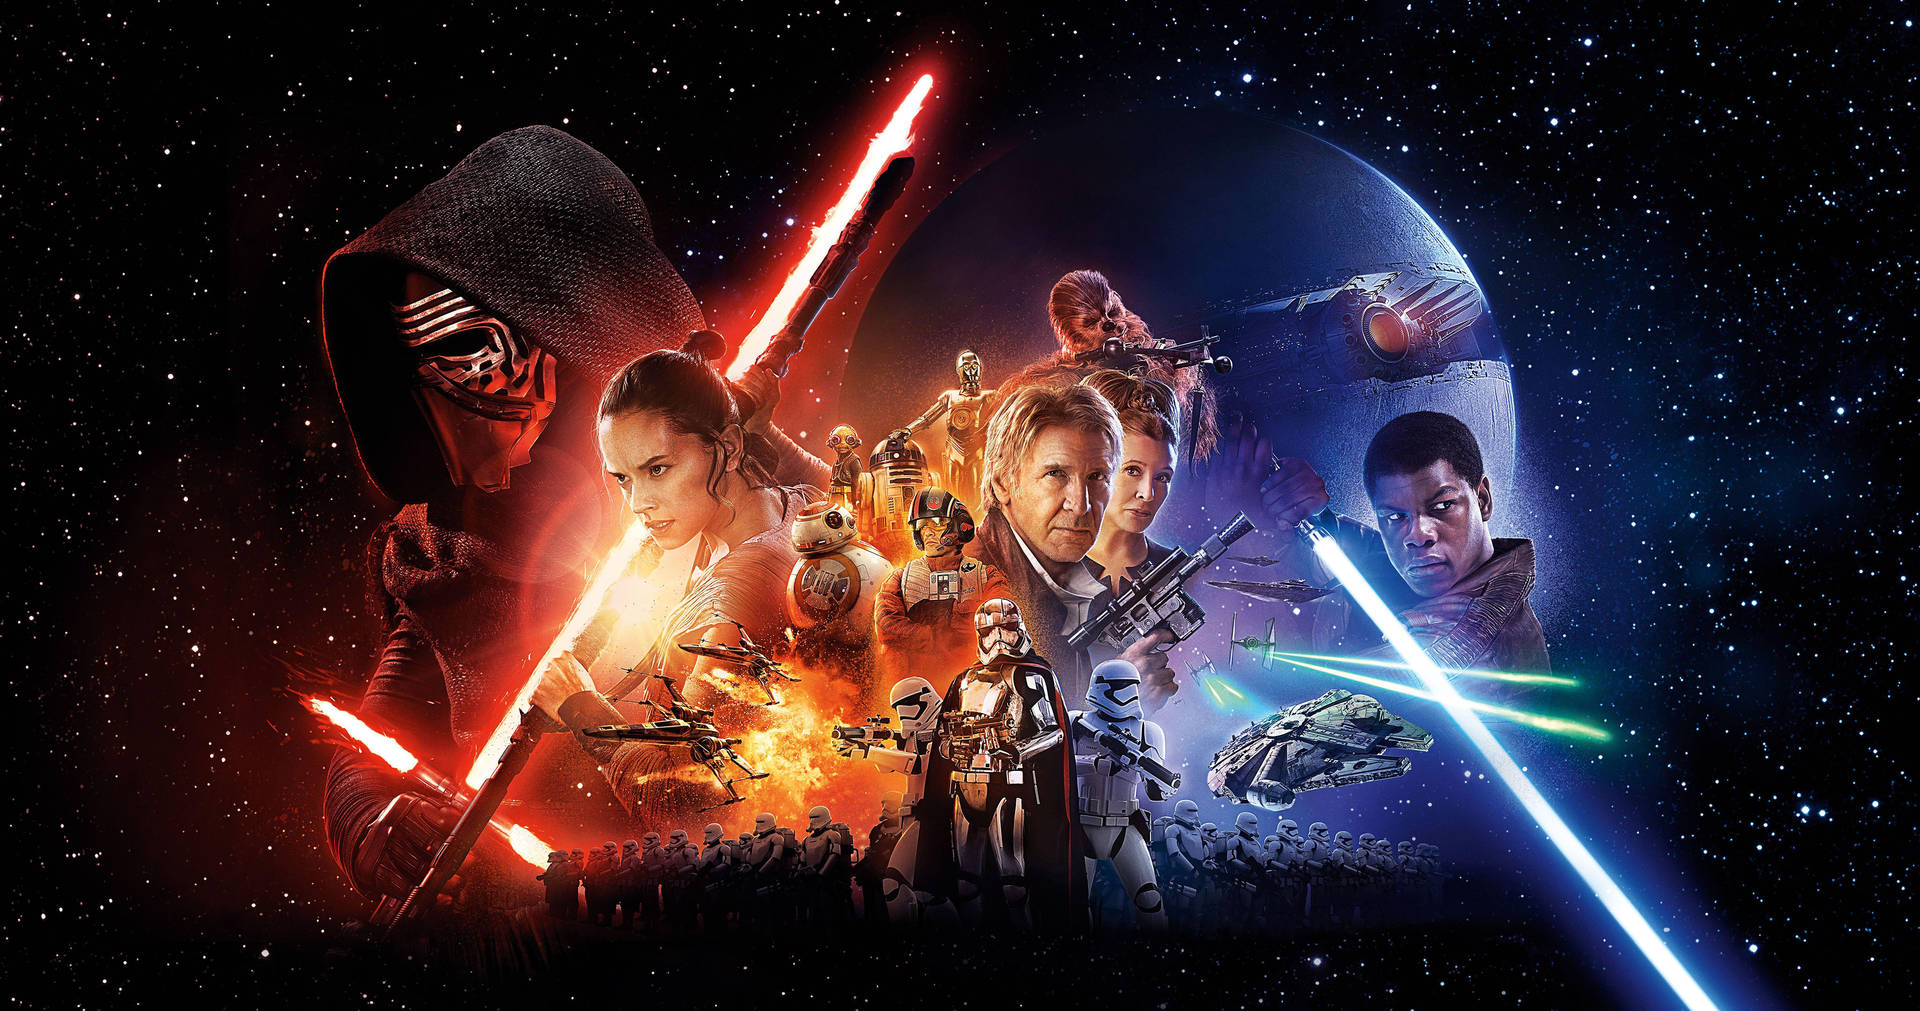 4k Star Wars The Force Awakens Wallpaper